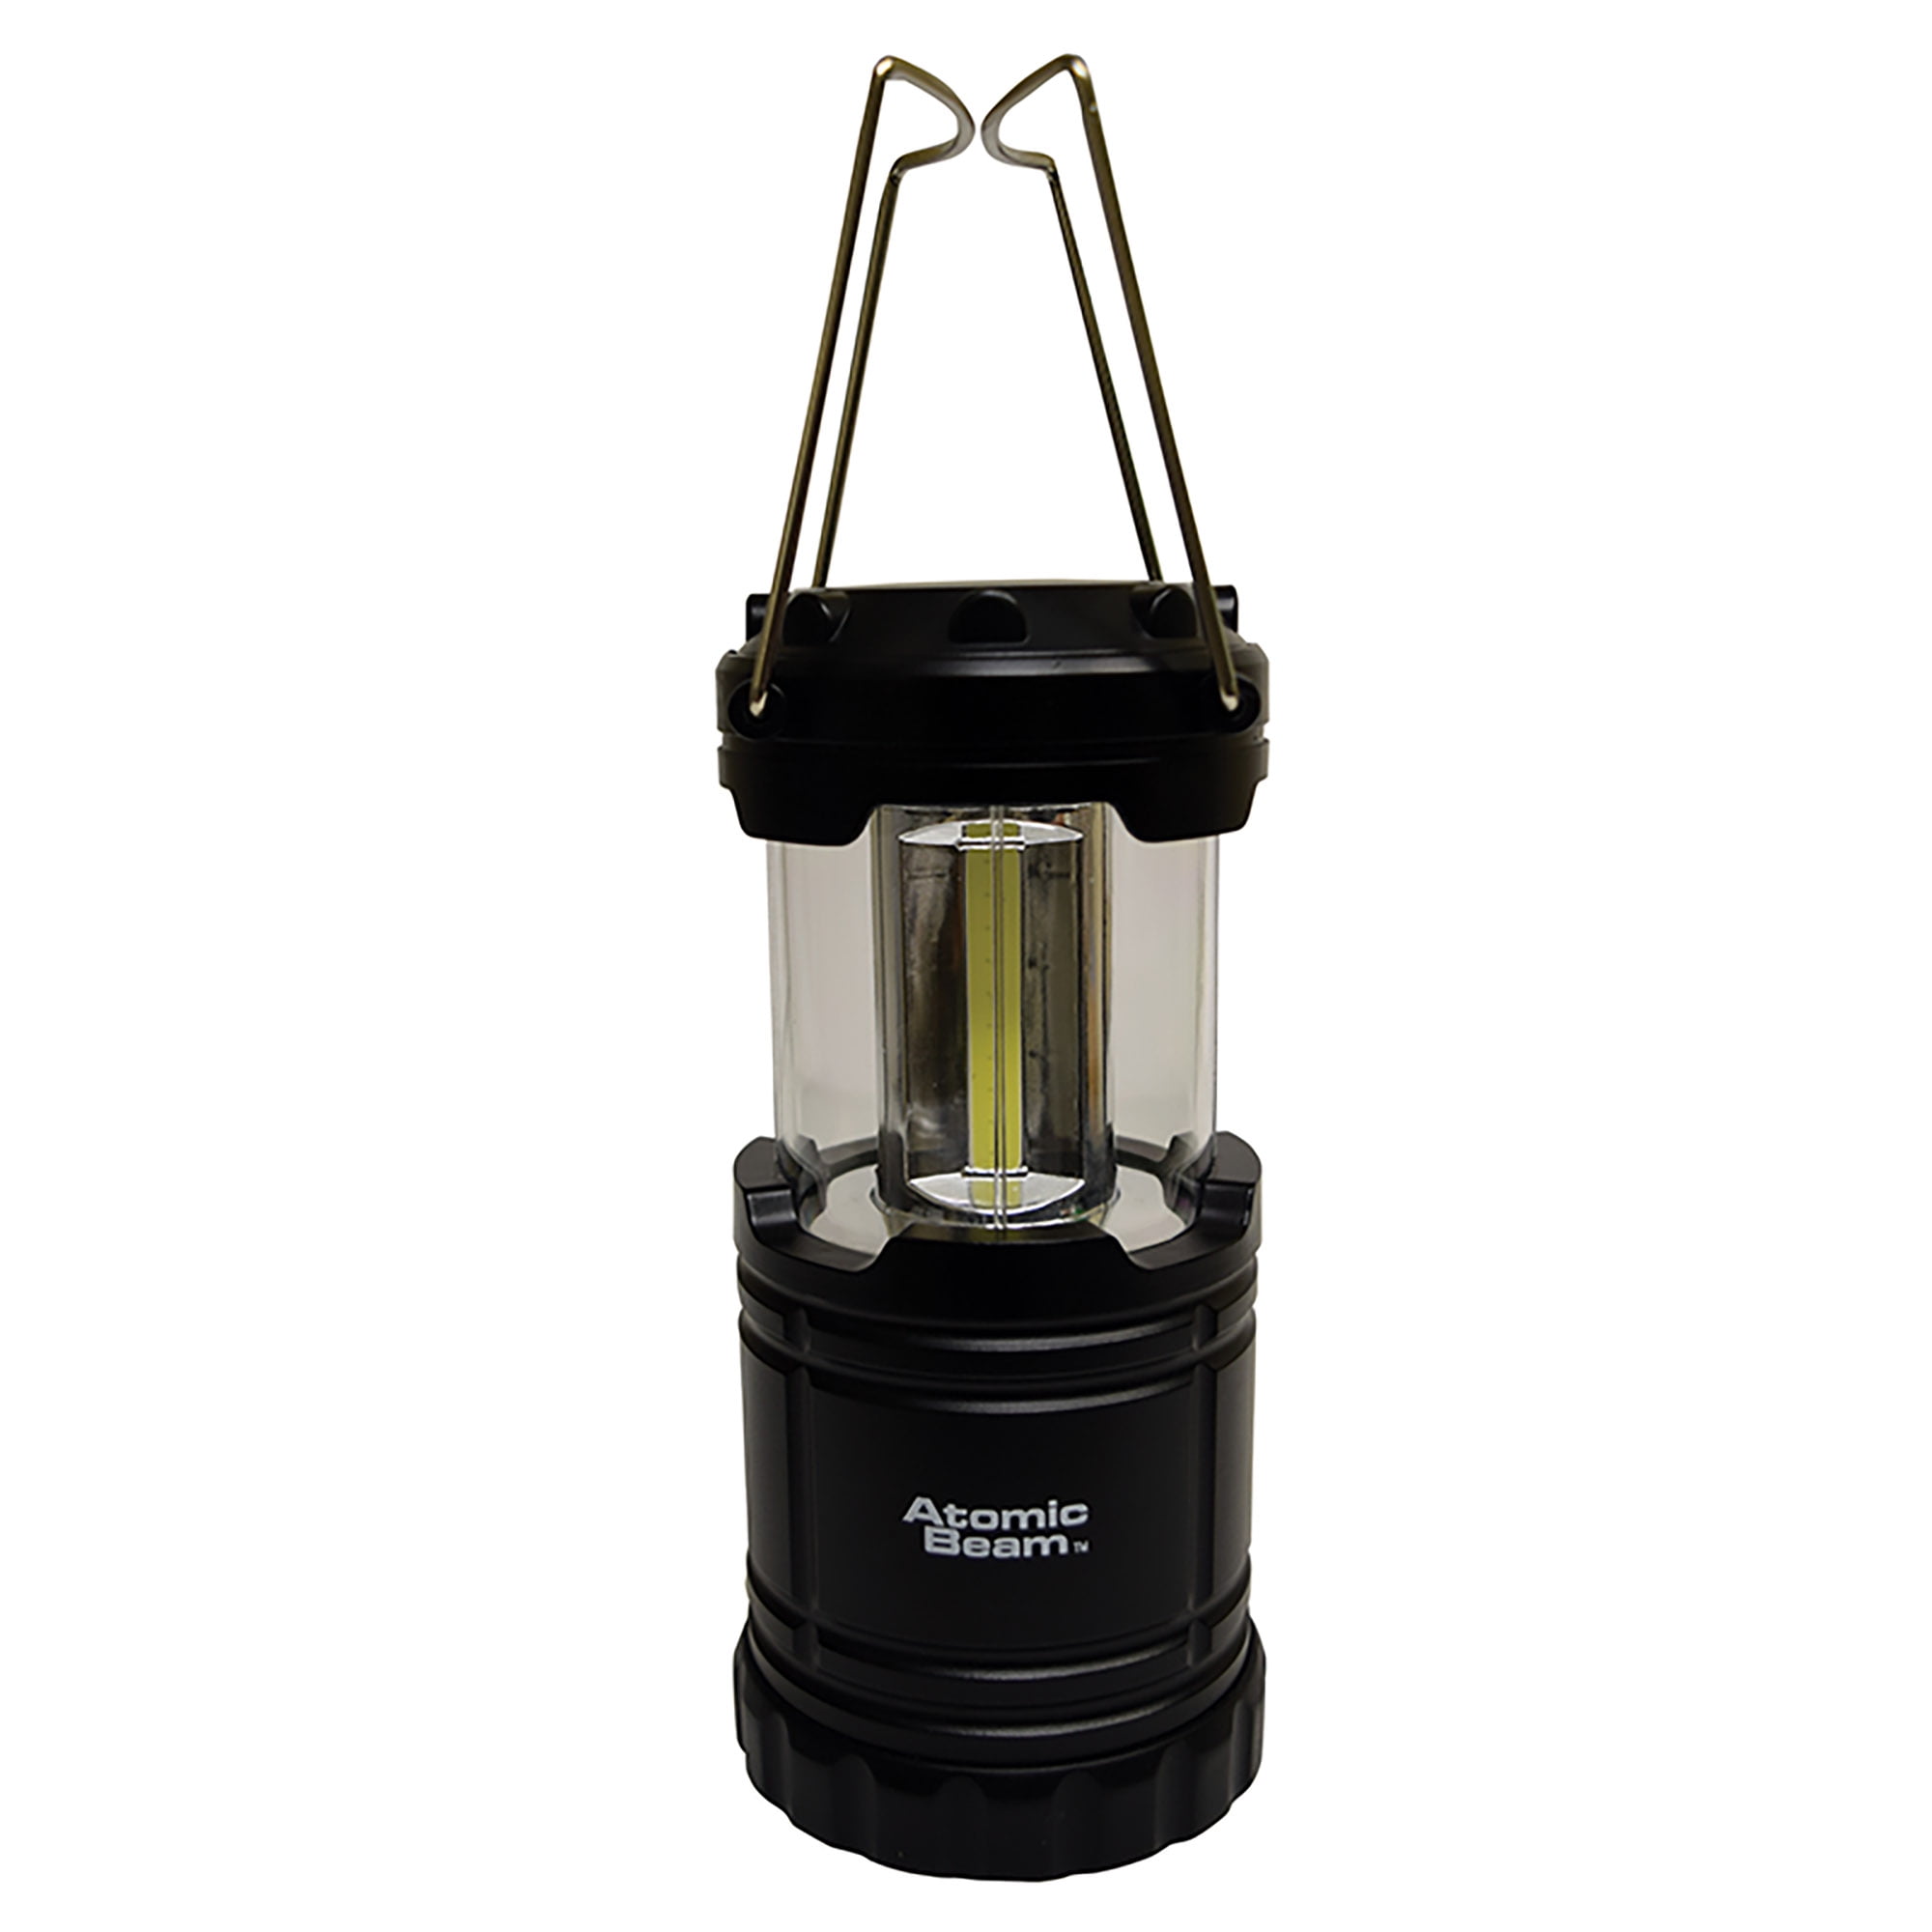 Atomic Beam Lantern - Roller Auctions